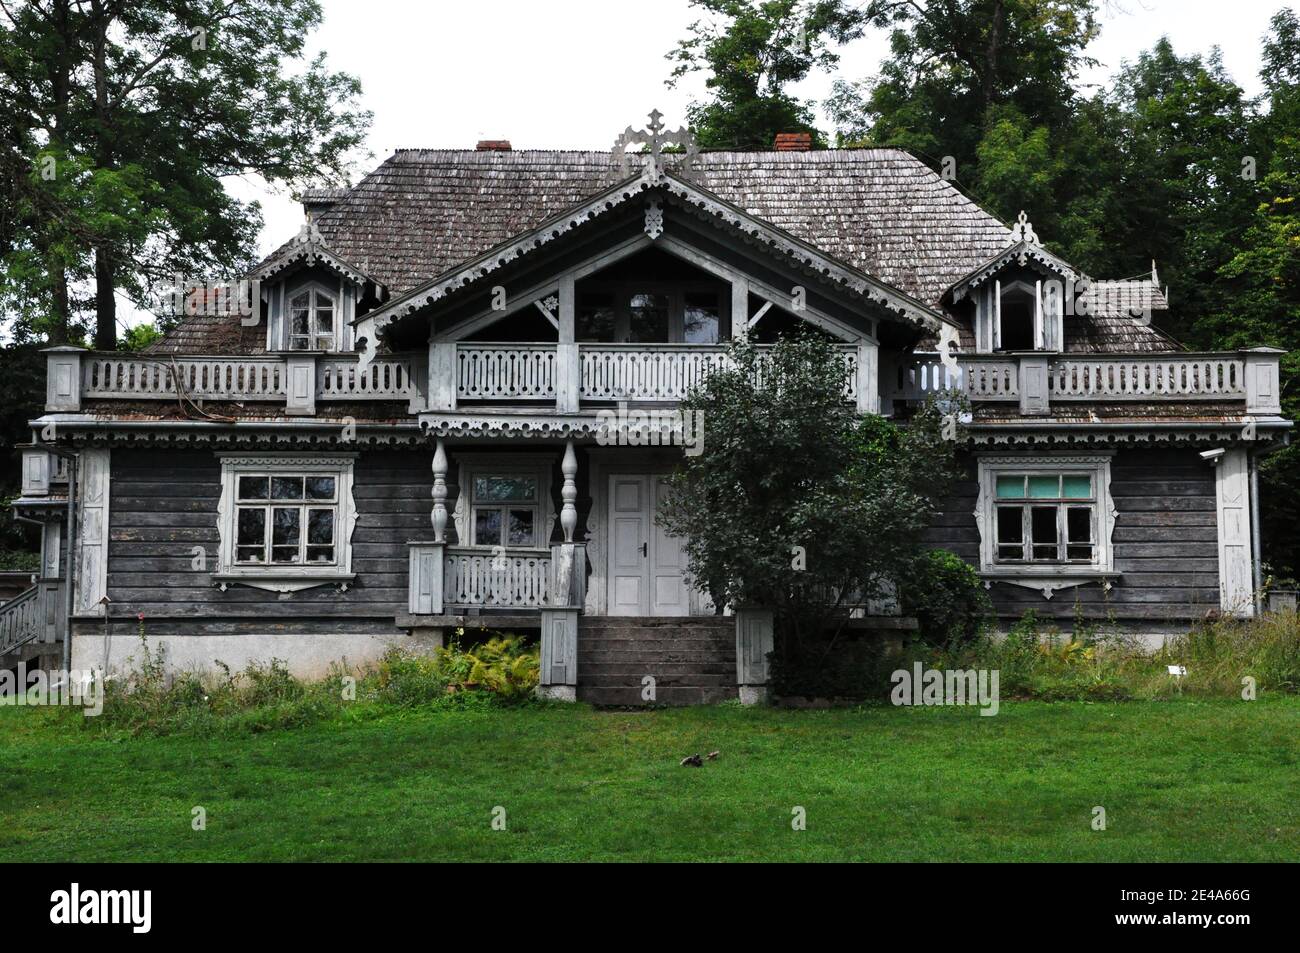 Storica casa padronale in legno a Białowieża in Polonia. Foto Stock